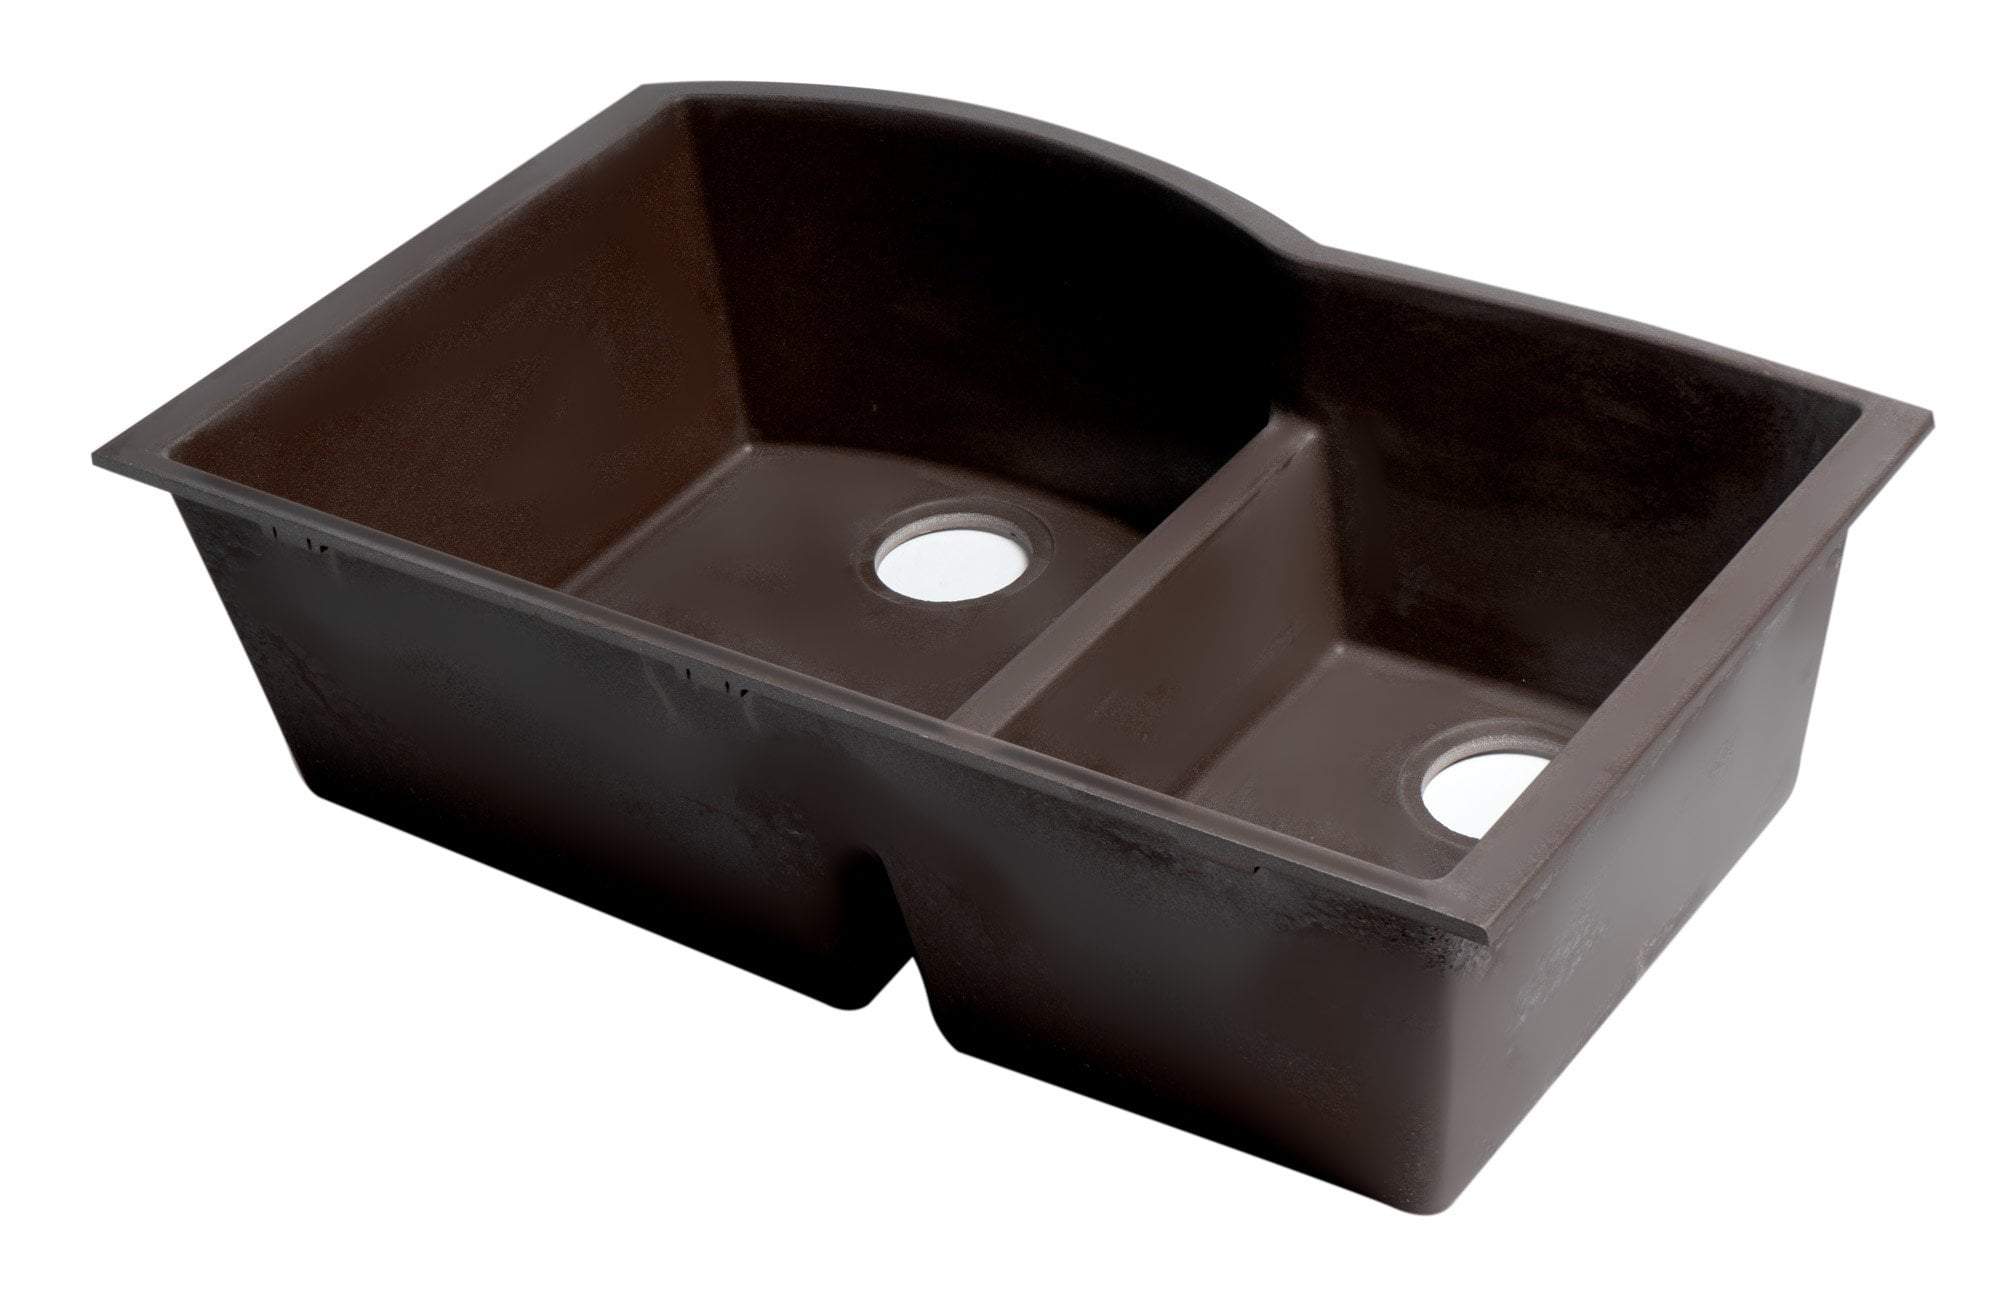 ALFI brand AB3320UM-C Chocolate 33" Double Bowl Undermount Granite Composite Kitchen Sink